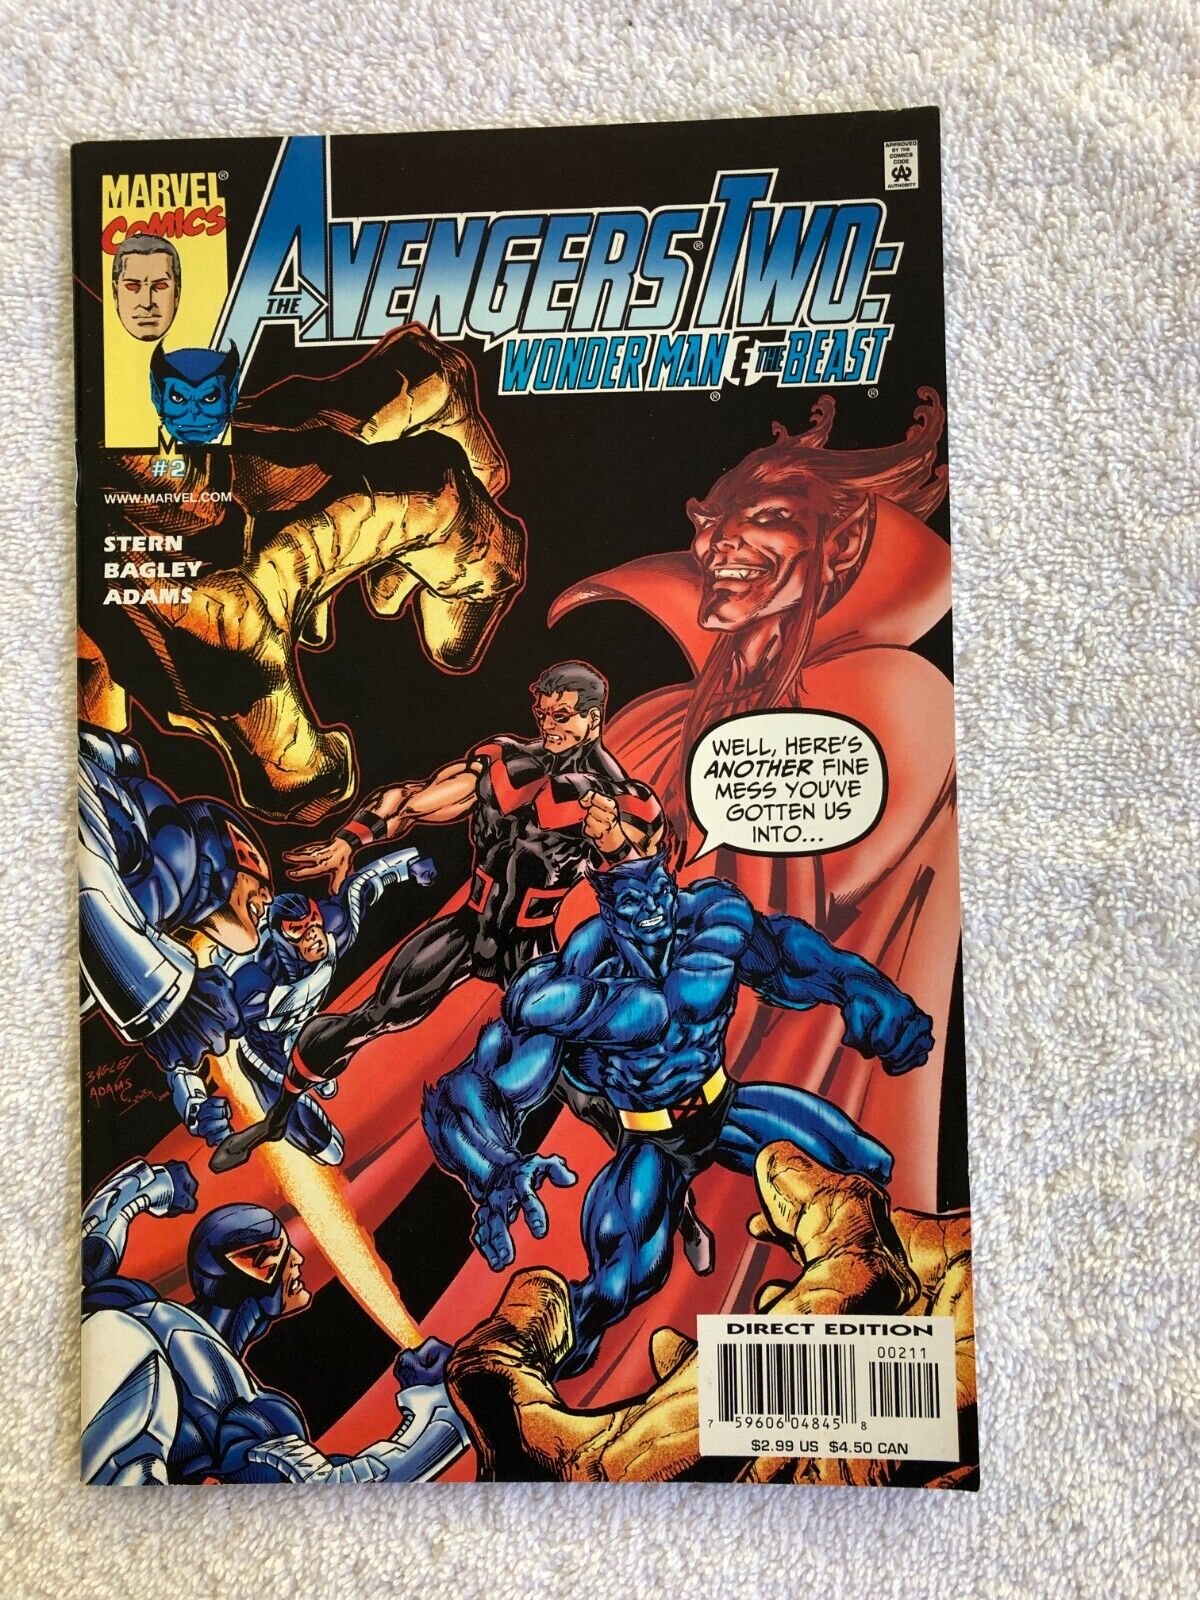 Avengers Two Wonder Man and the Beast #2 (Jun 2000, Marvel) VF+ 8.5